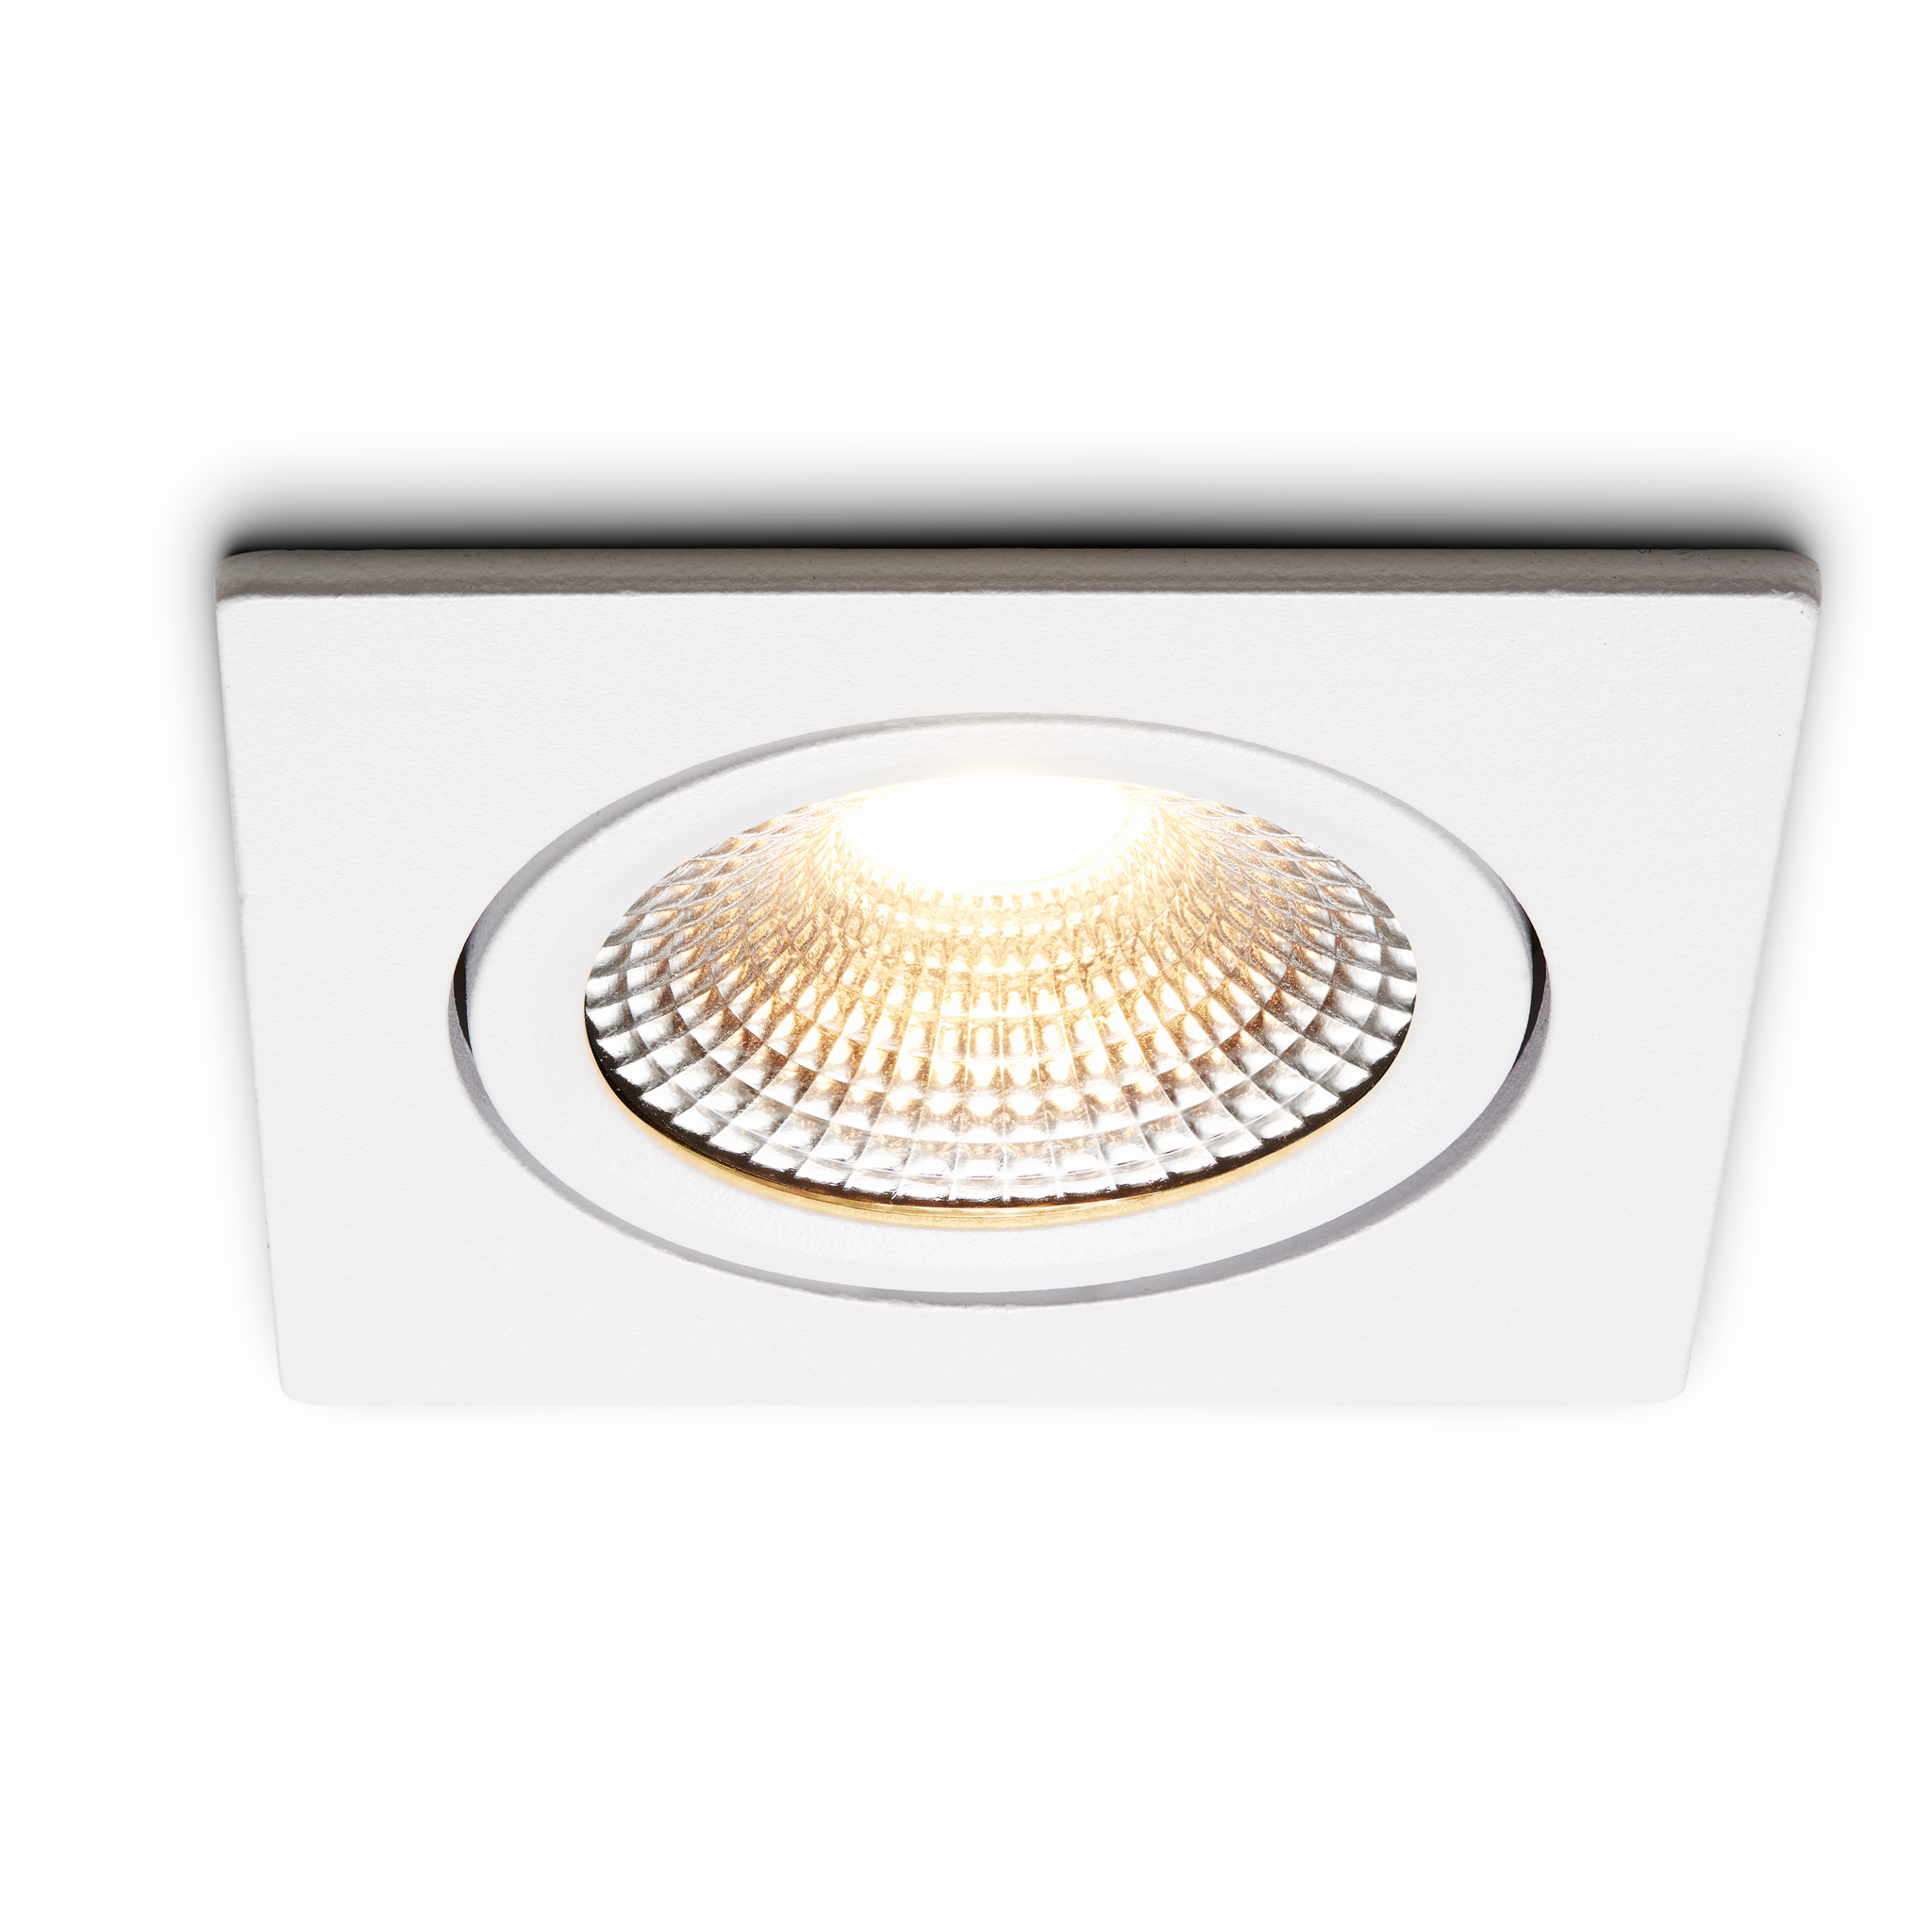 Bont Verplicht Kaal LED-inbouwspot Trento wit 5W dimbaar IP54 extra warm-wit 2700K -  Ledwereld.nl